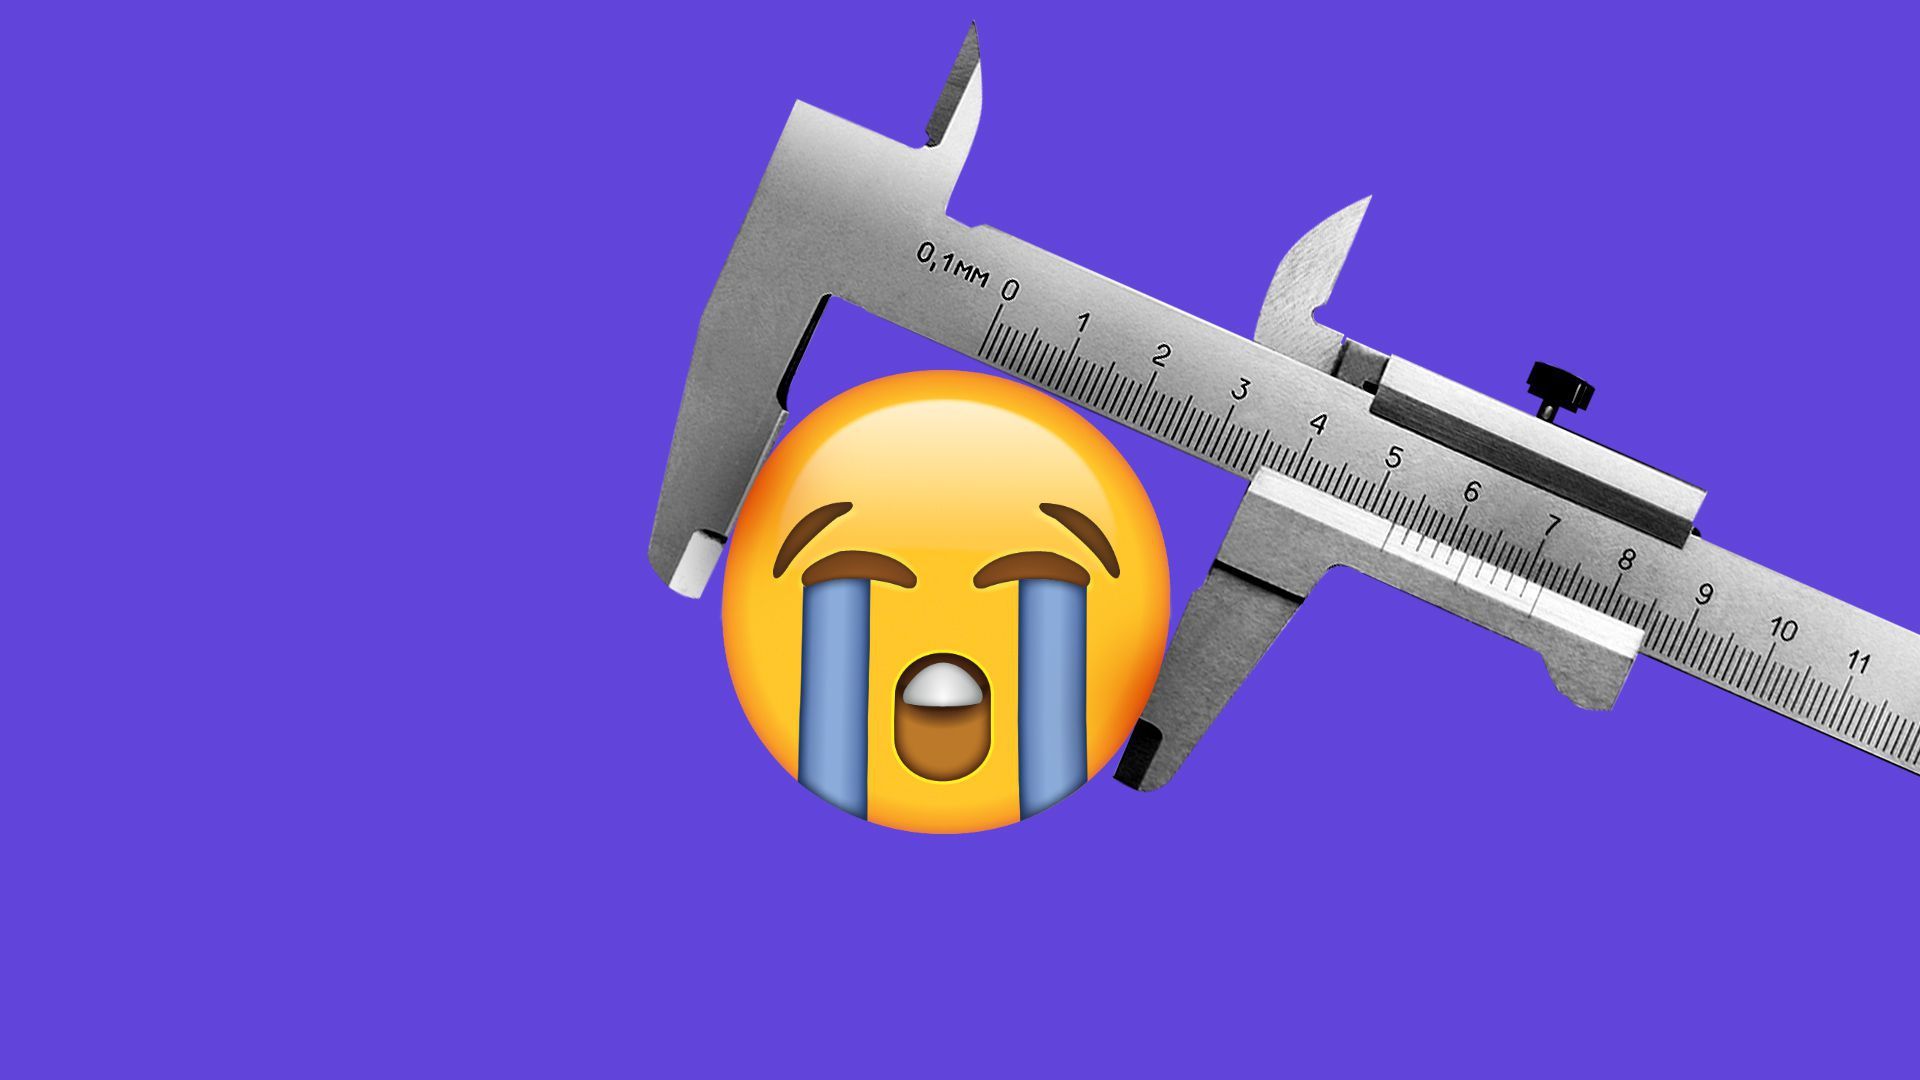 Calipers measuring a painful emoji.